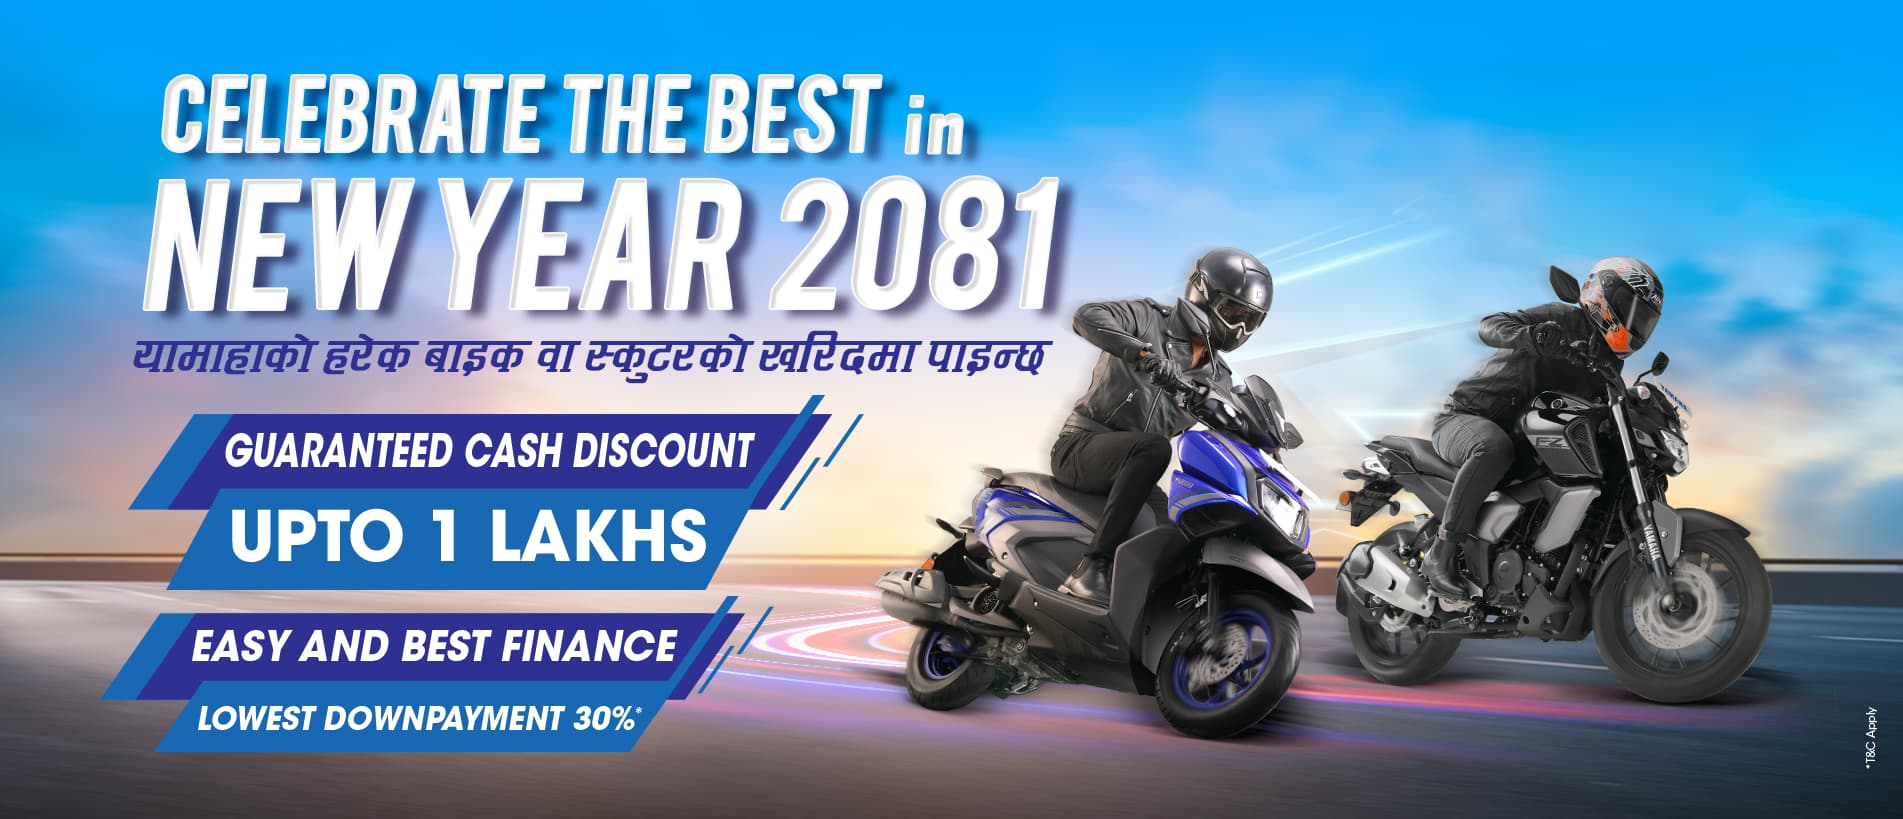 Yamaha-New-Year-2081-Offer